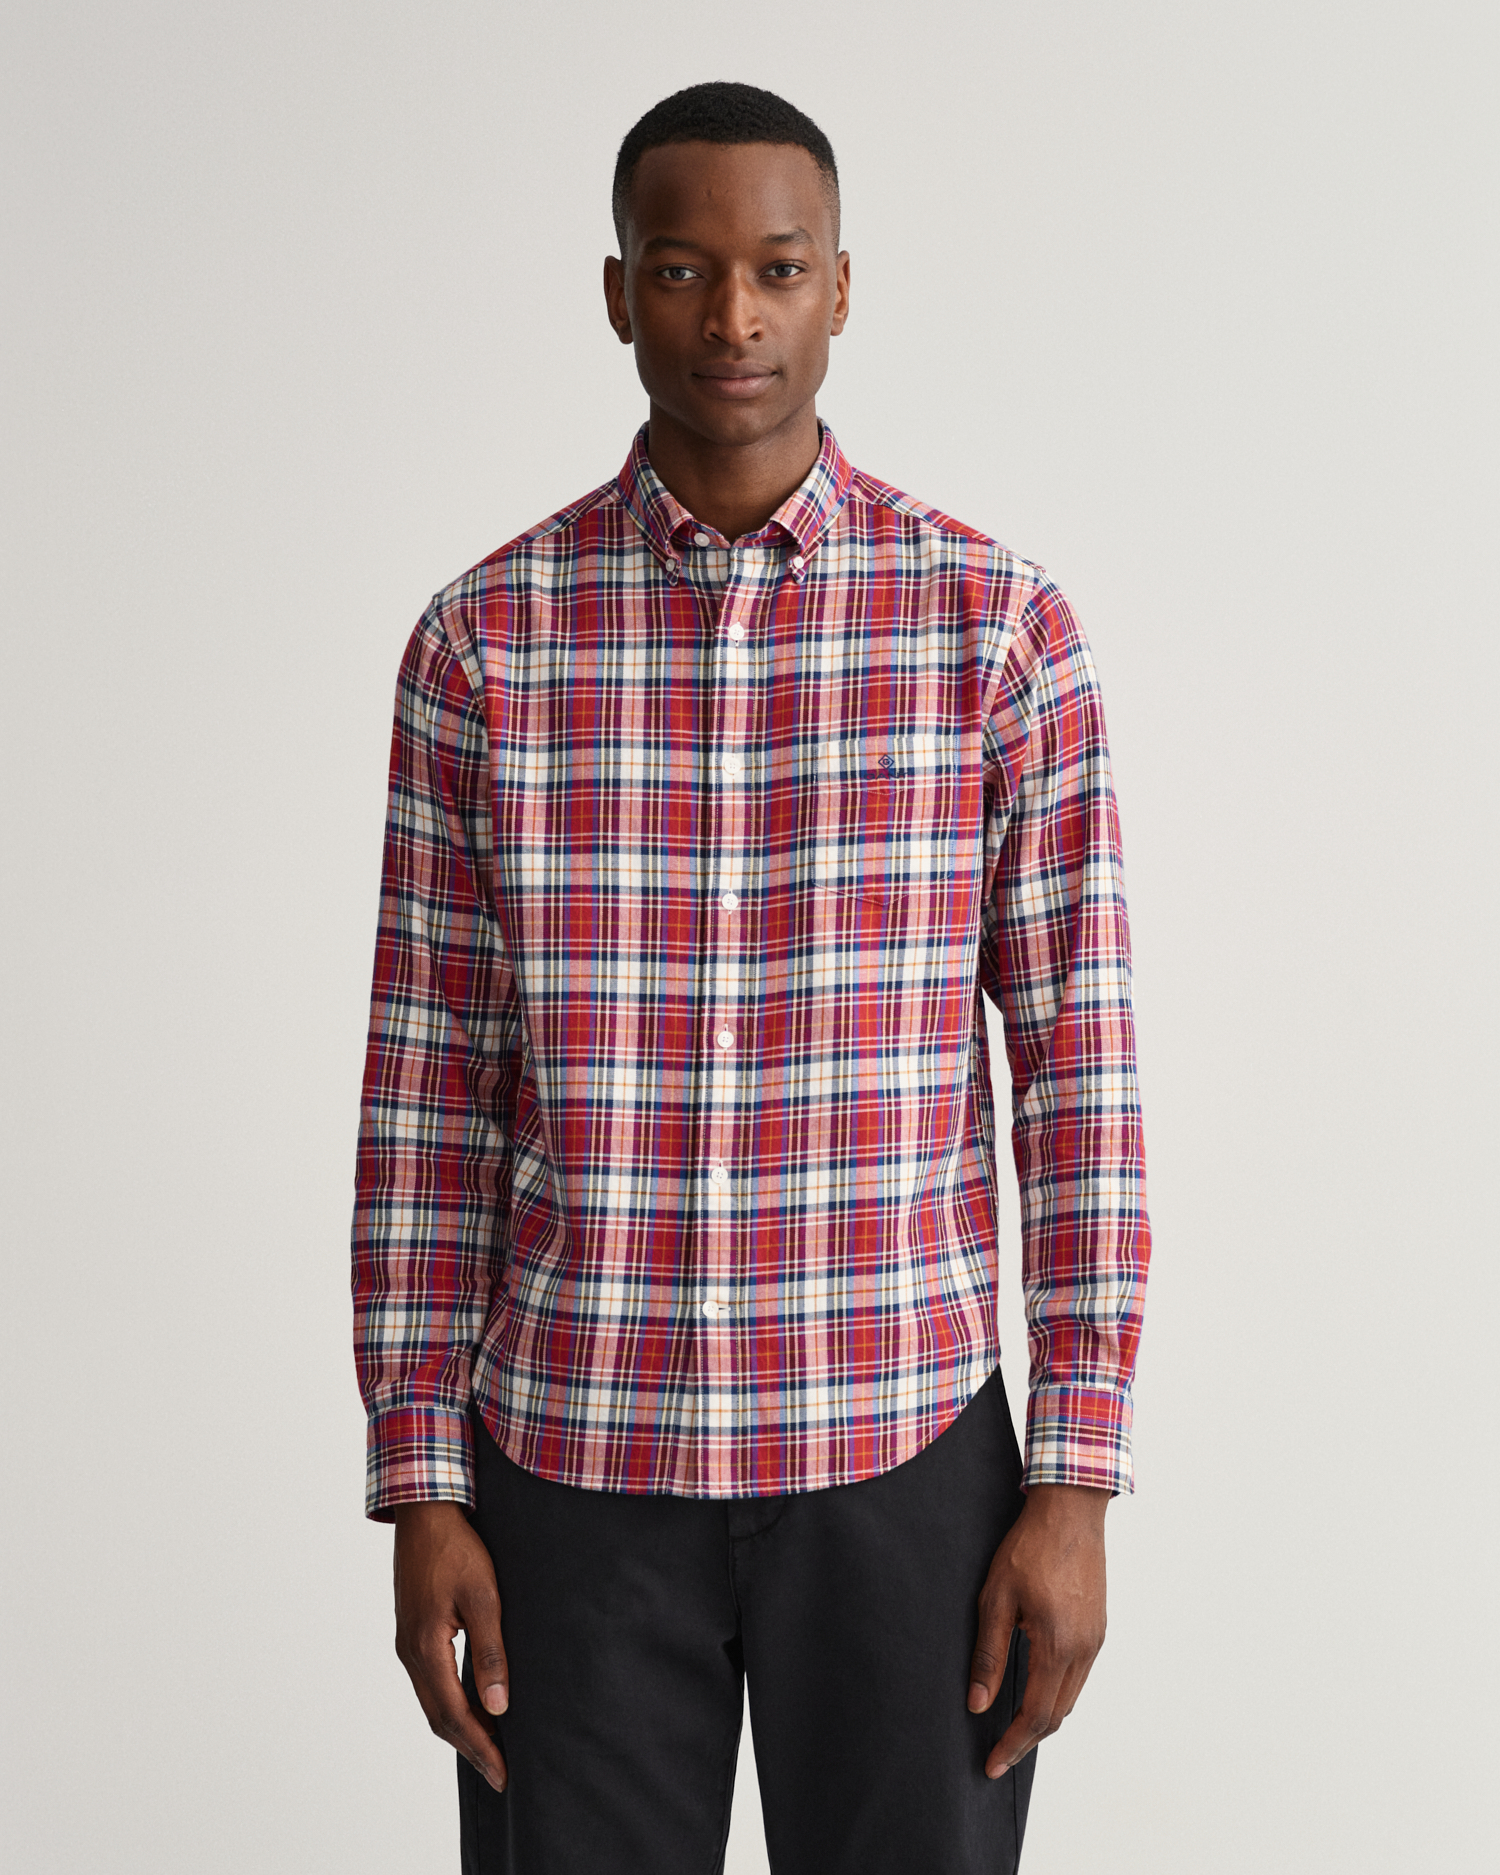 Men's Shirts: Oxfords & Checkered Shirts for Men